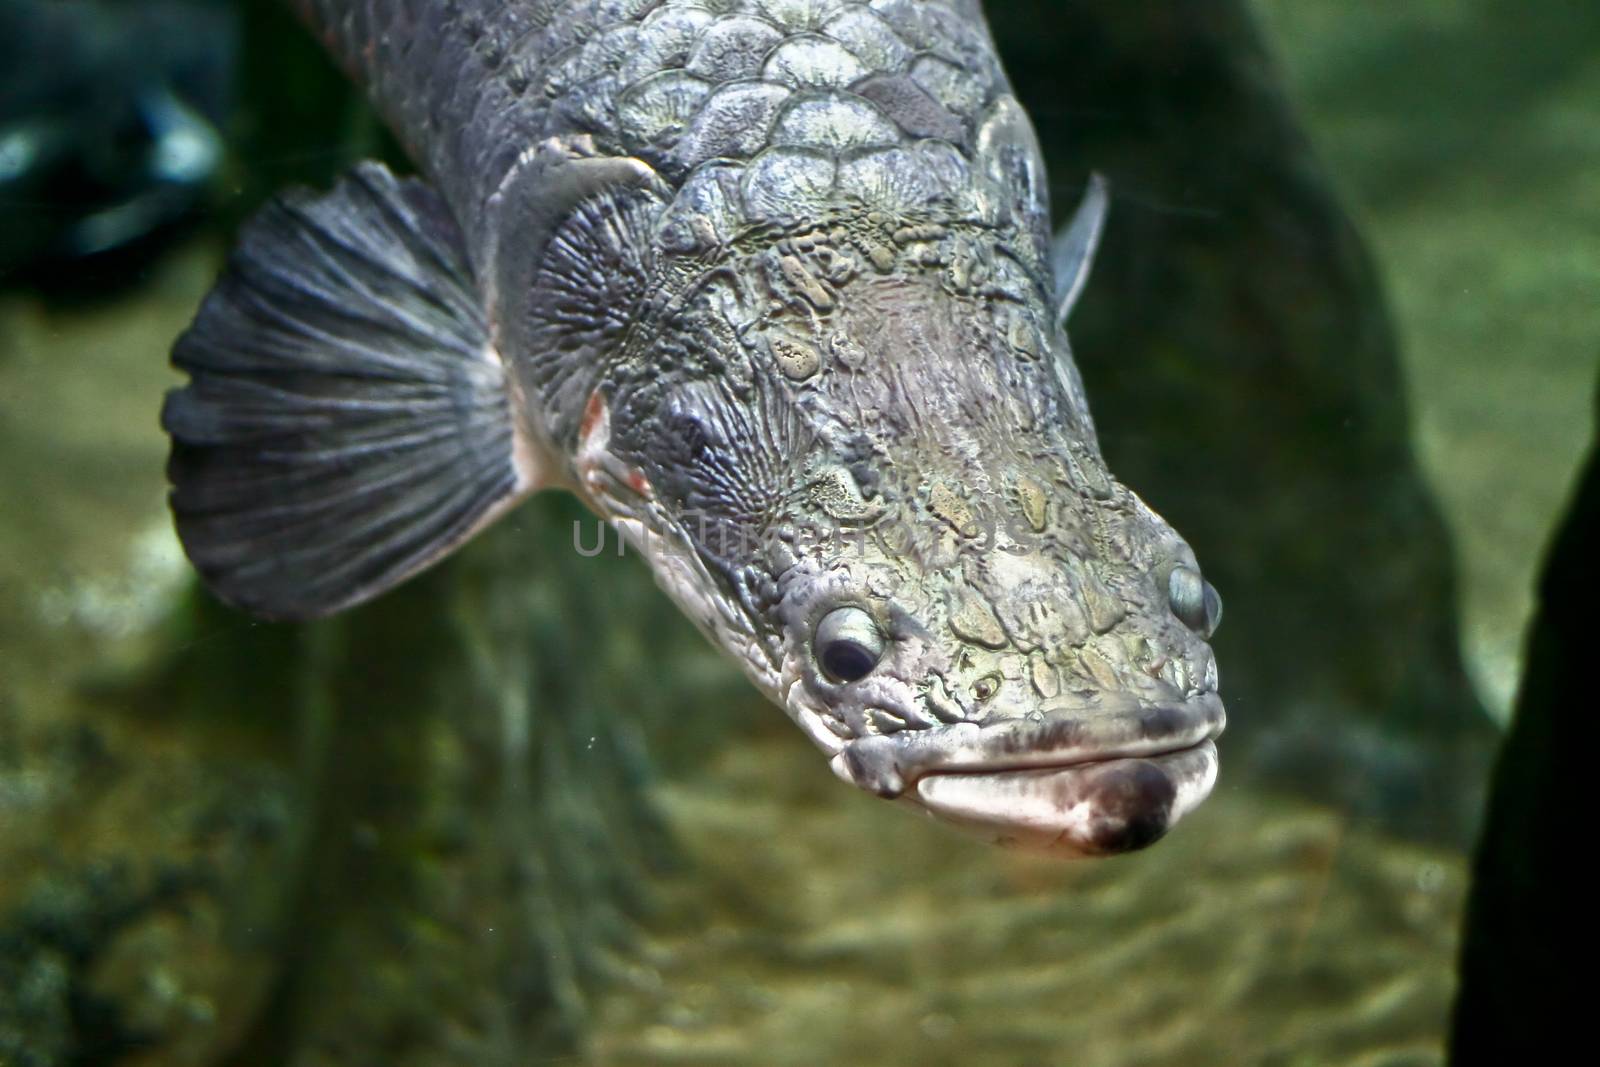 Fish in an aquarium tank